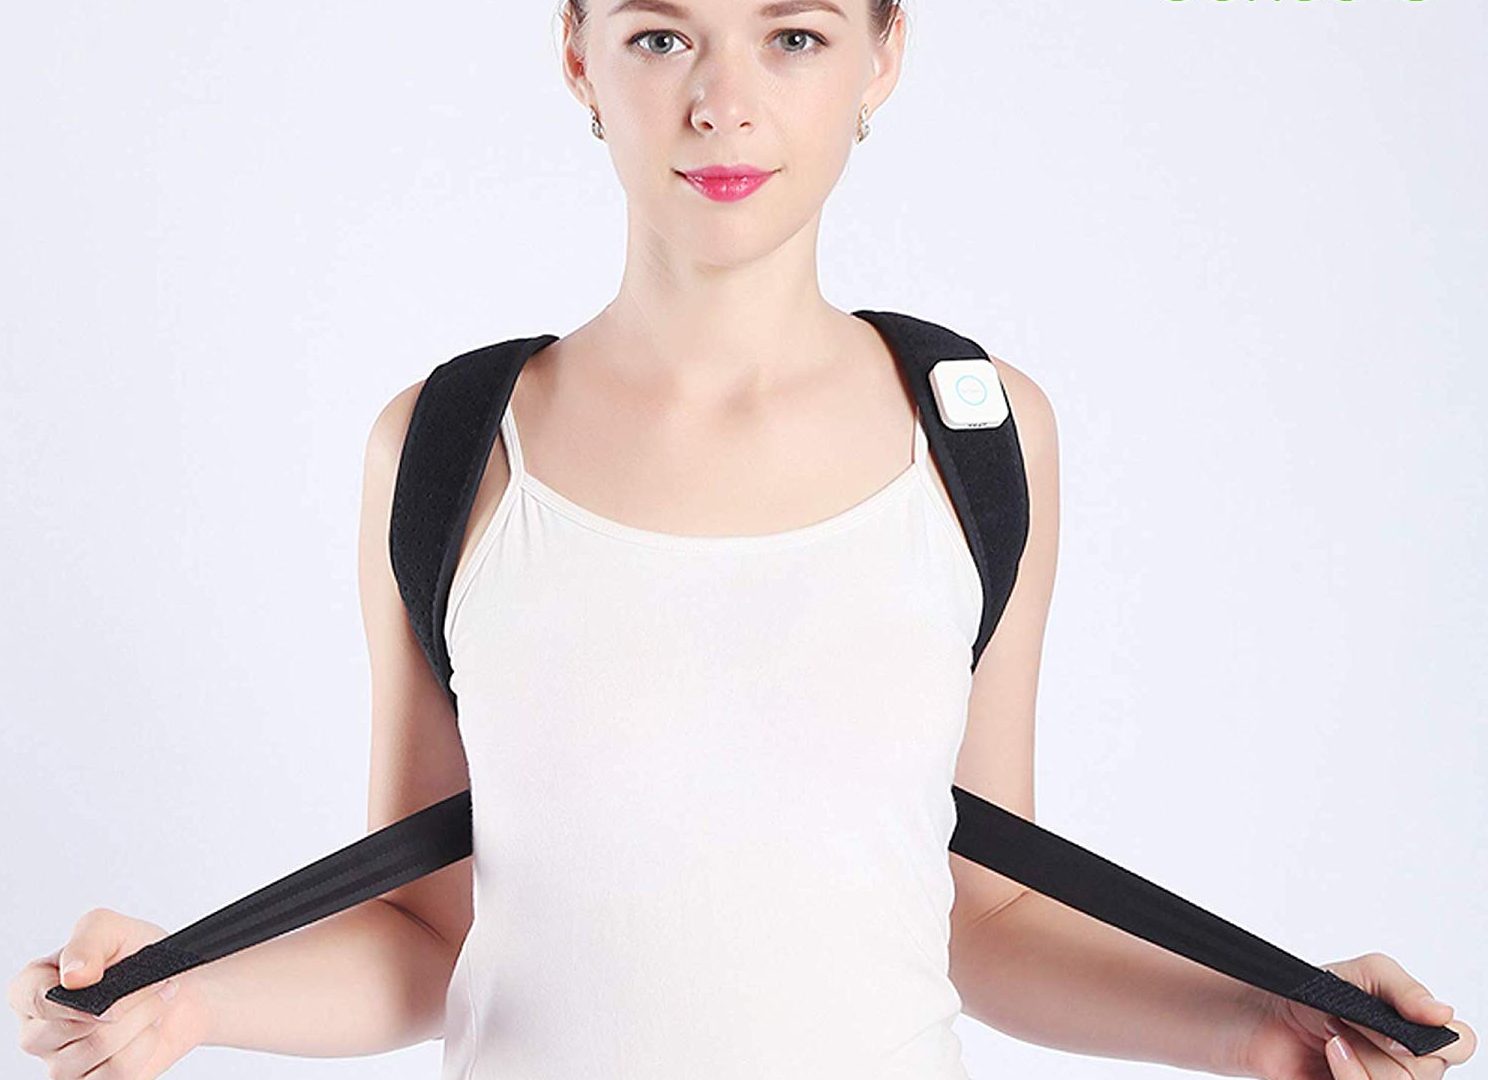 Sense-U Smart Wearable Posture Trainer Brace That Vibrates When You Slouch